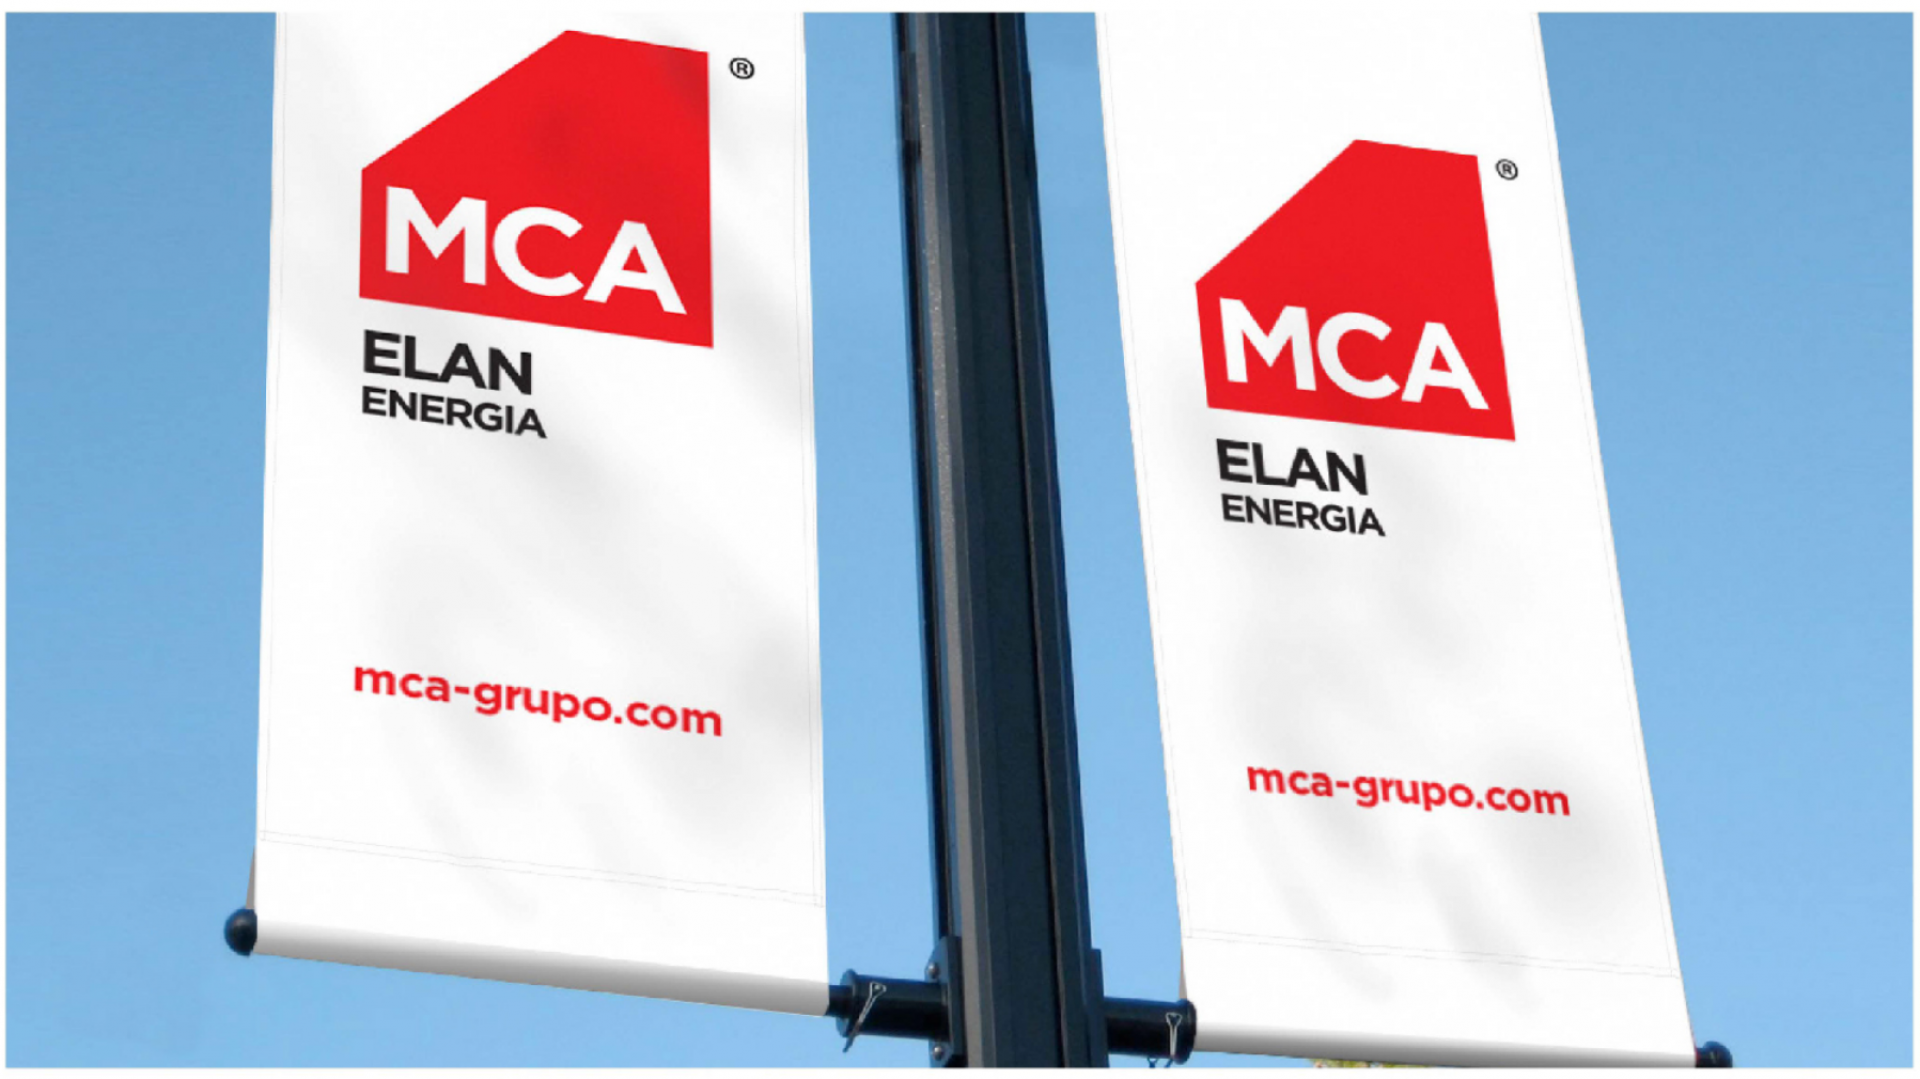 MCA - Professional services